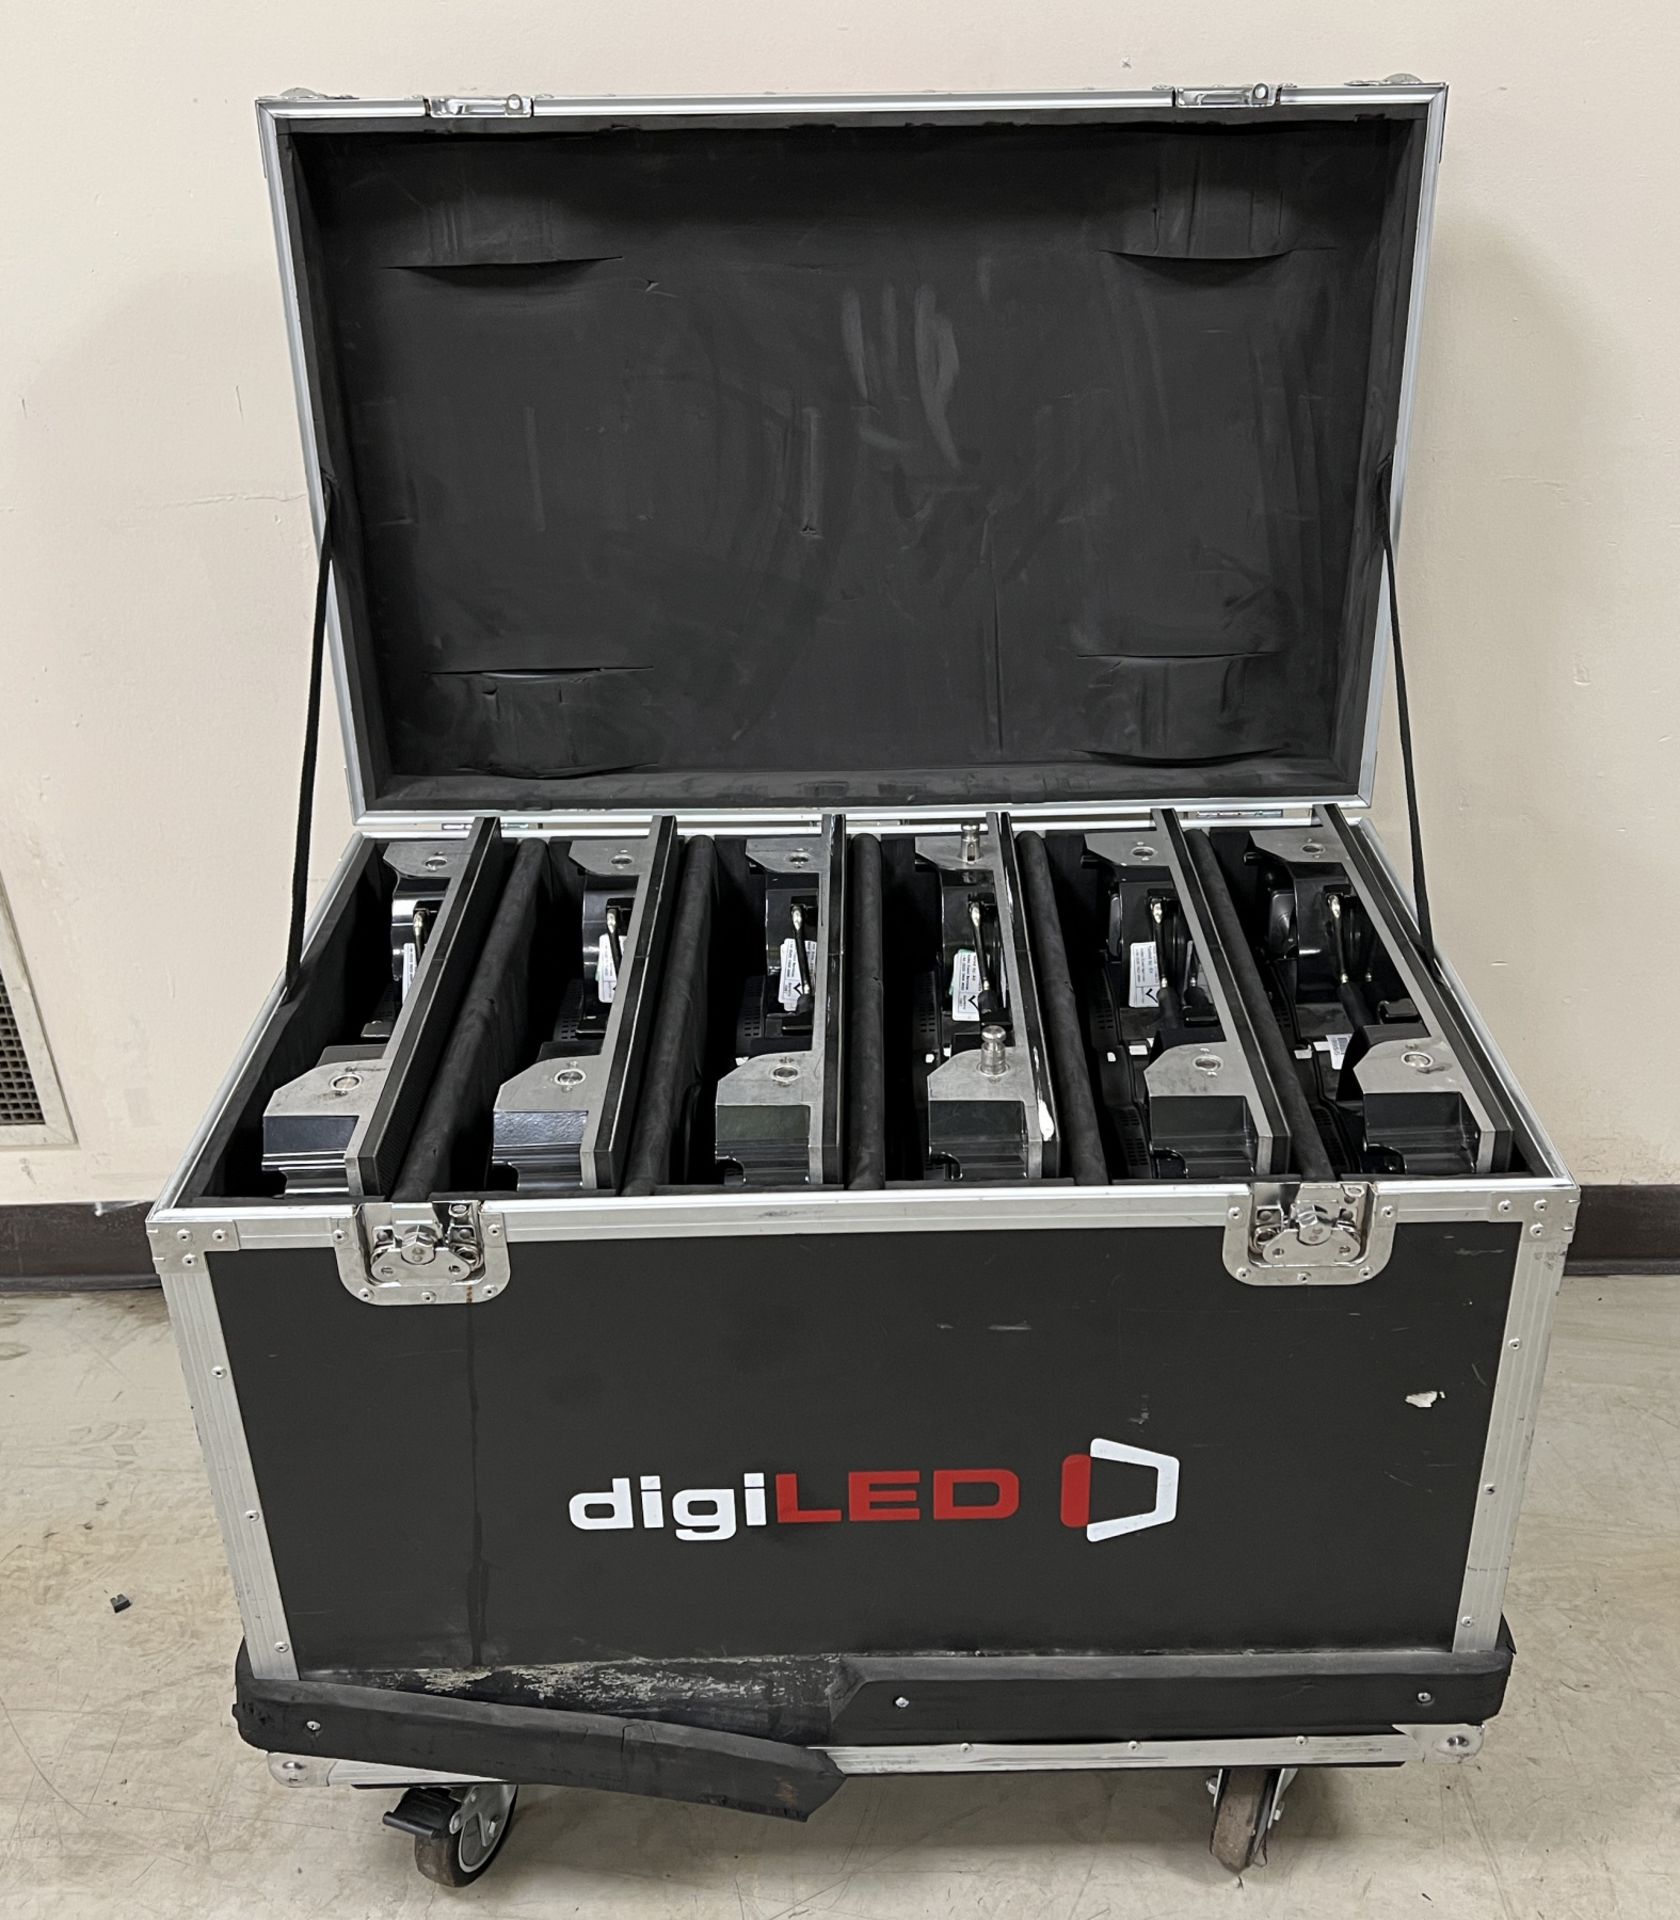 Digi LED HRI3900 kit - 120 LED tiles housed in 20 wheeled flight cases - see description for details - Image 148 of 196